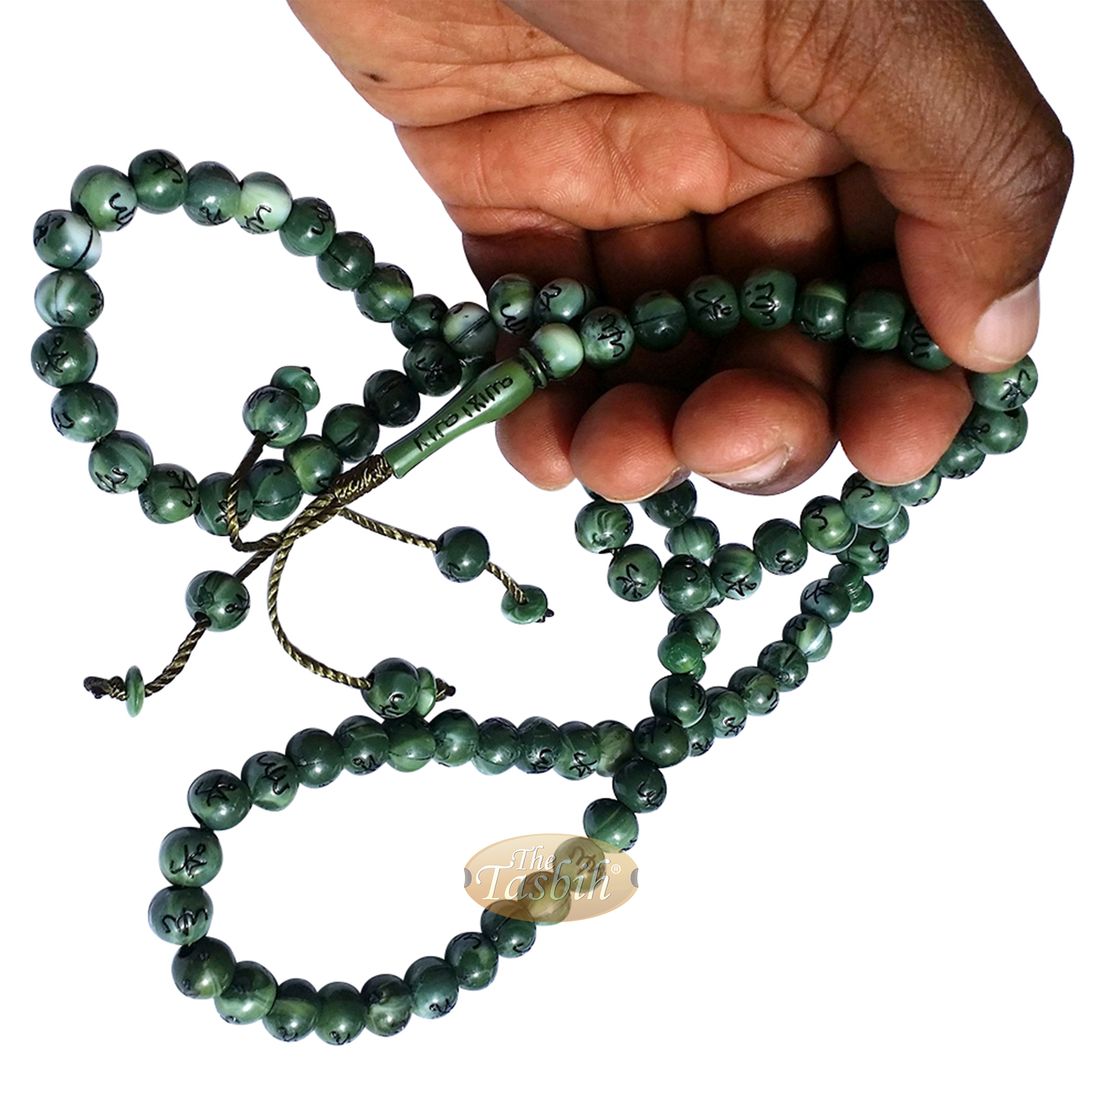 Large Marble Green Plastic 10mm Islamic Tasbih Black Allah Muhammad Prayer Beads